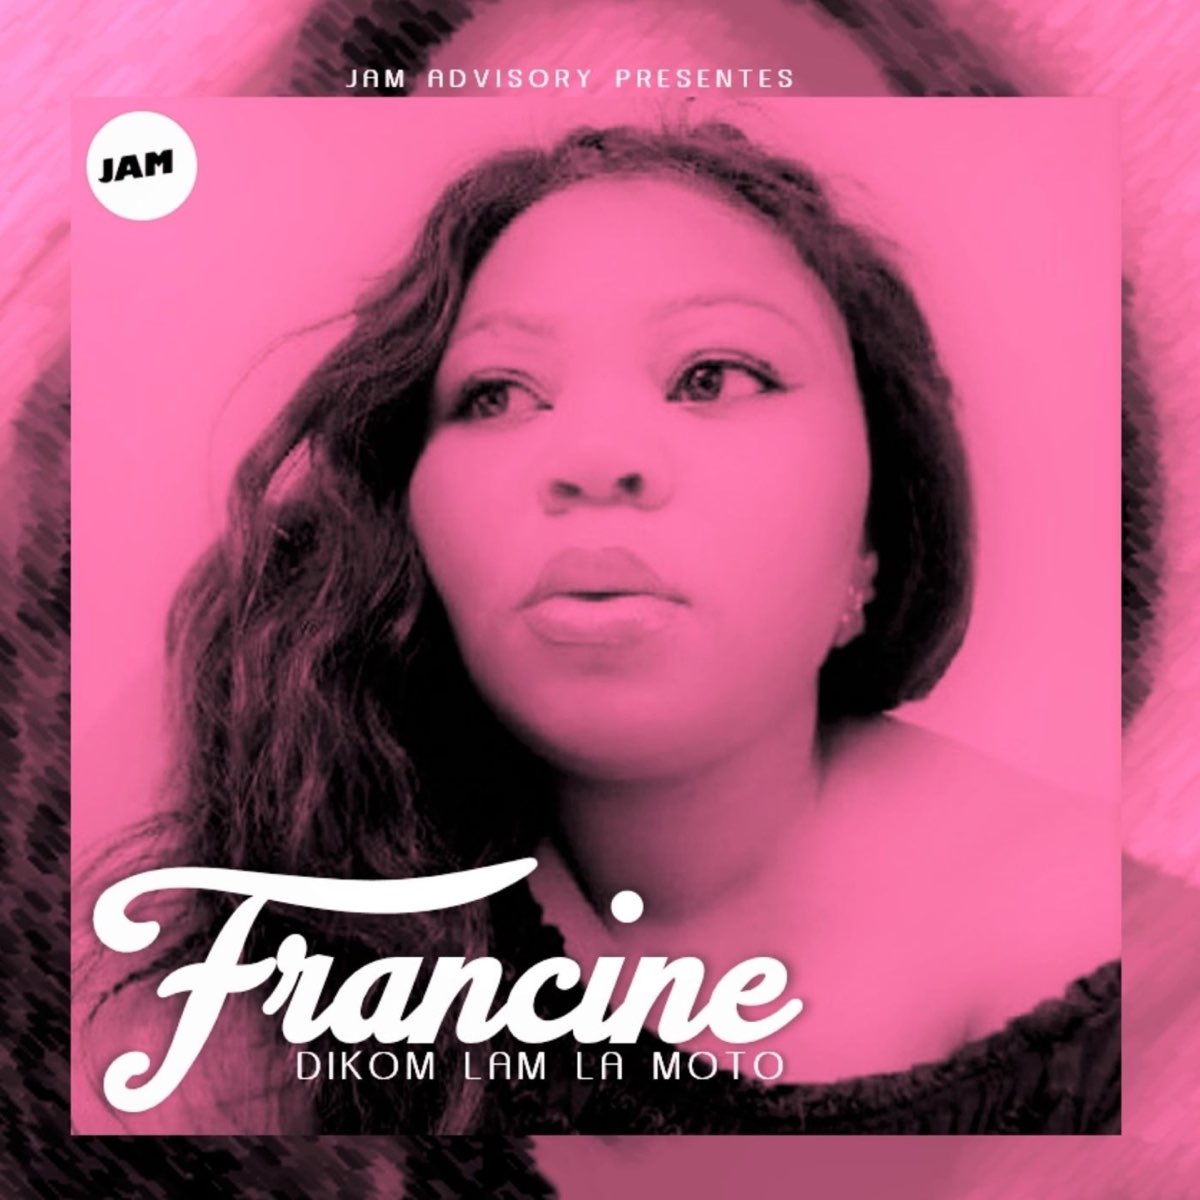 Dikom Lam La Moto - Single by Francine on Apple Music